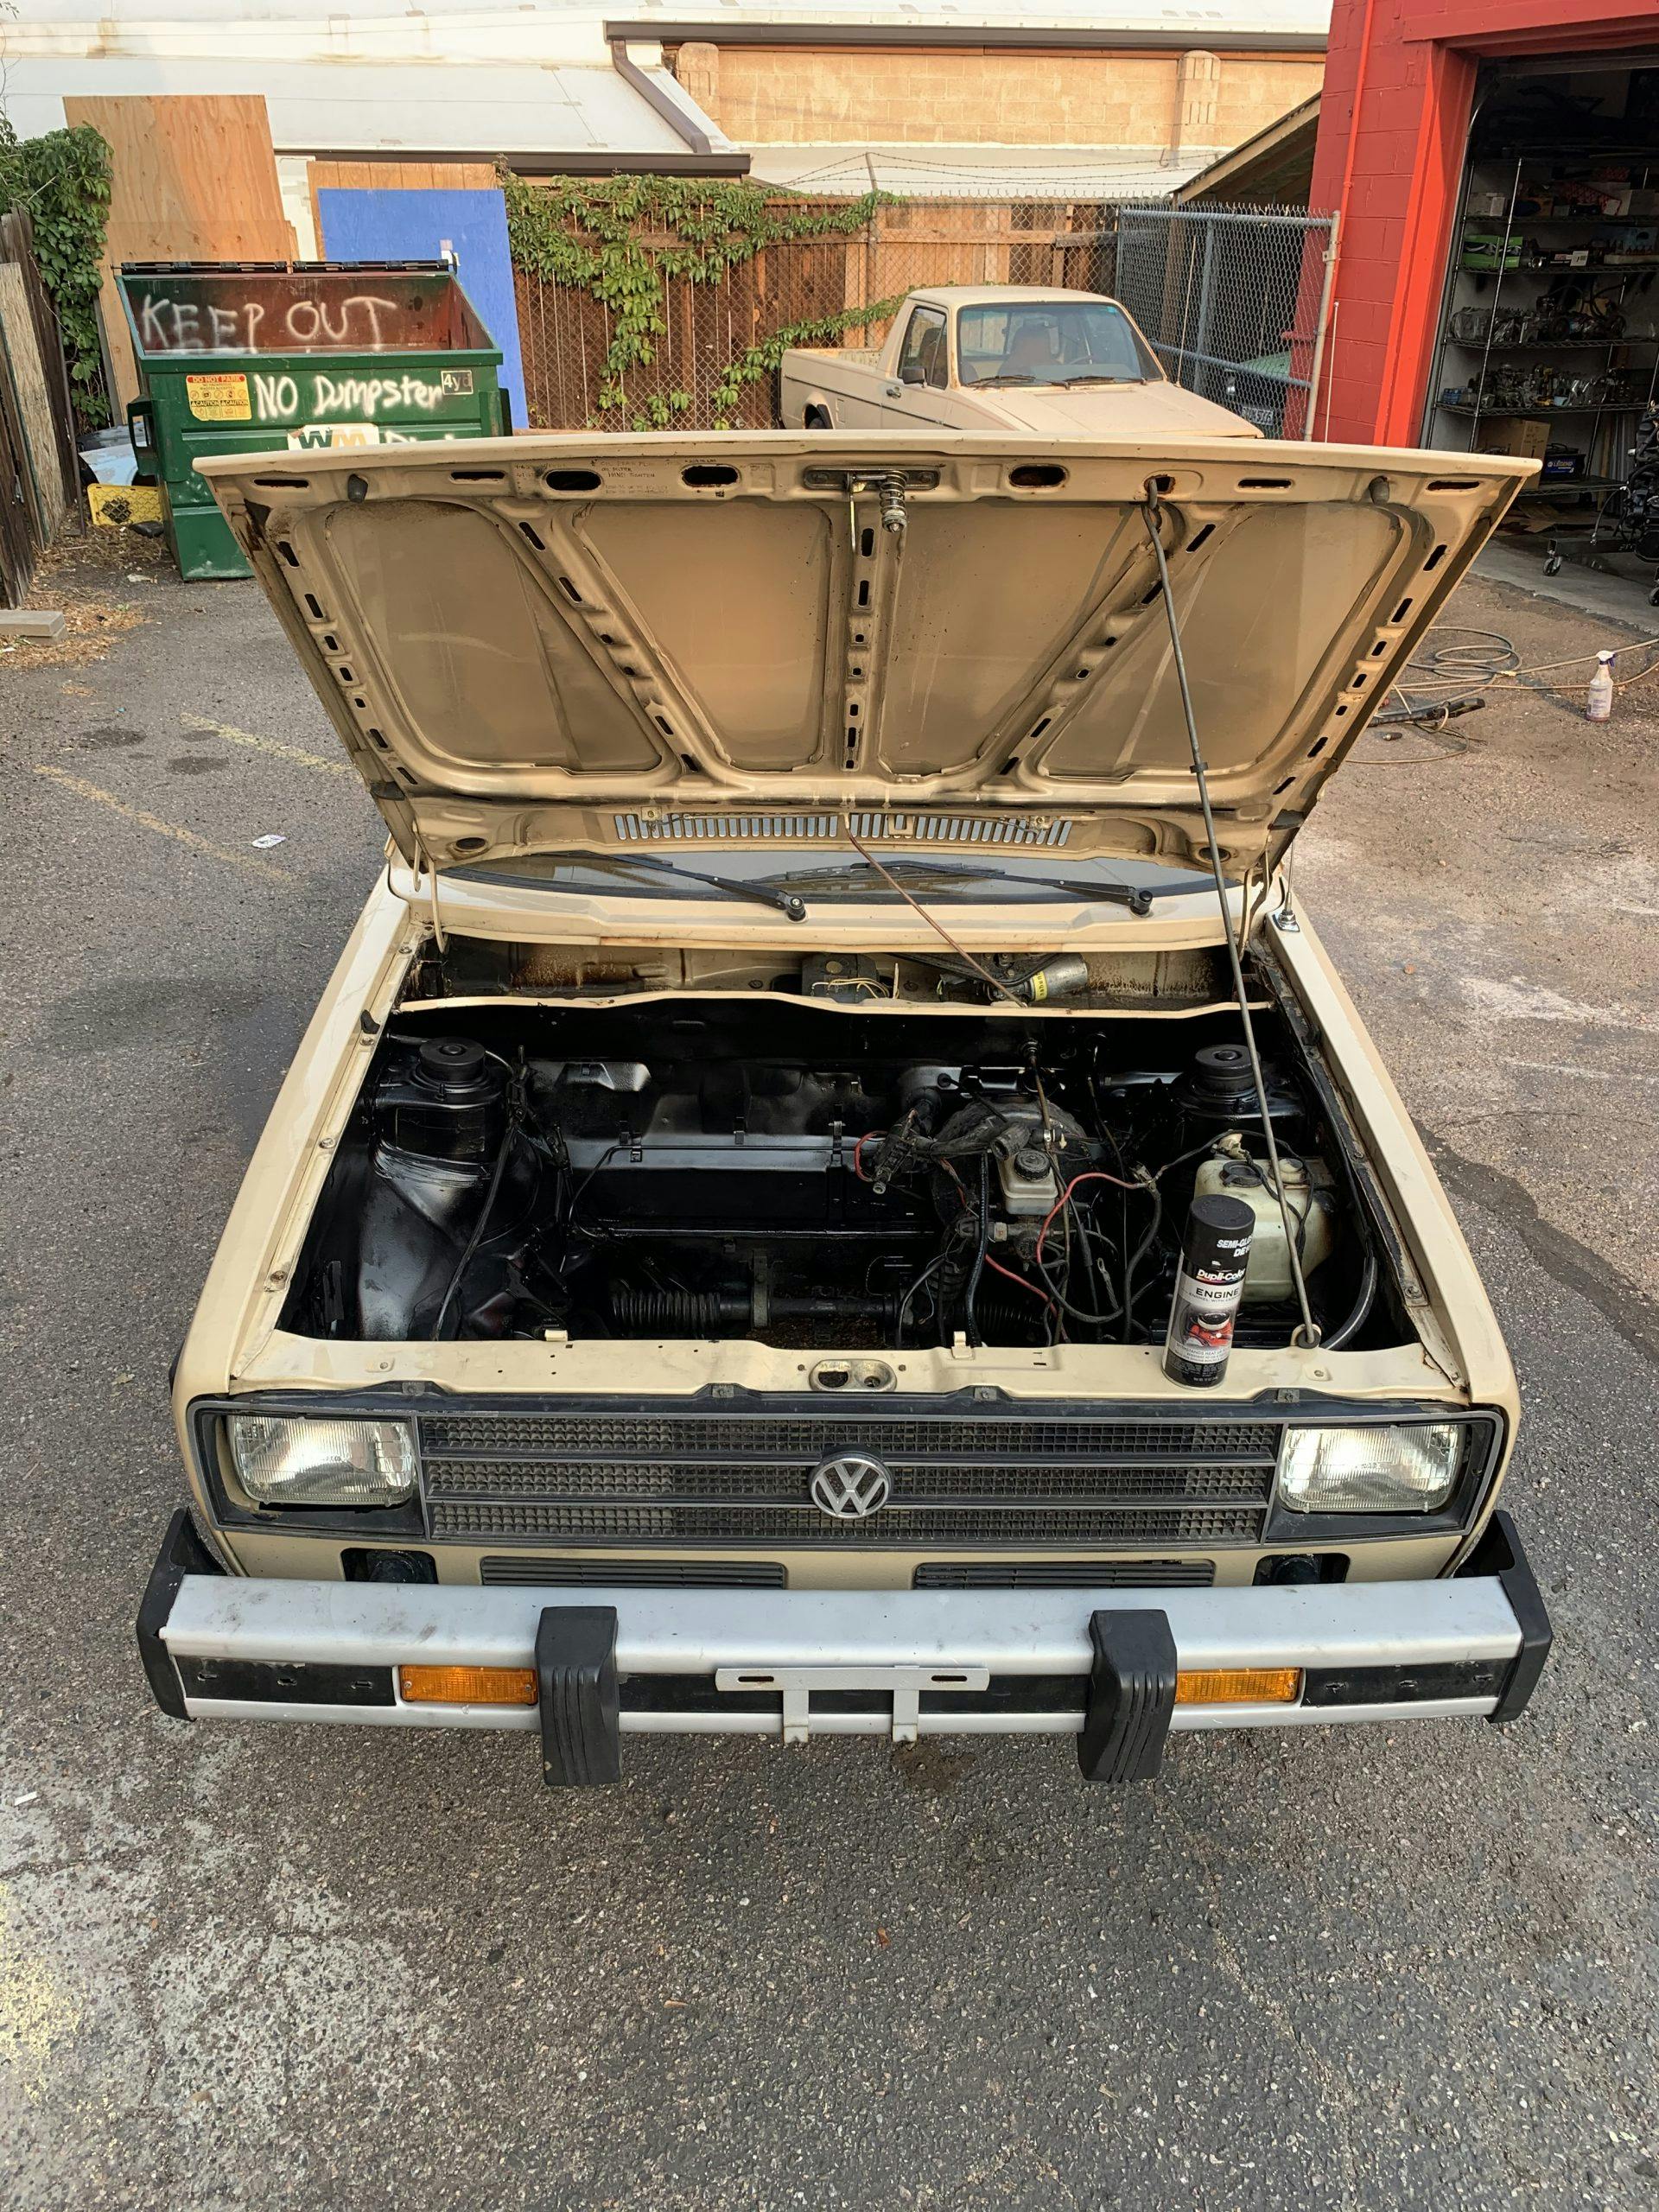 1980 VW Rabbit TDI swap engine out Aug 22, 6 29 13 PM